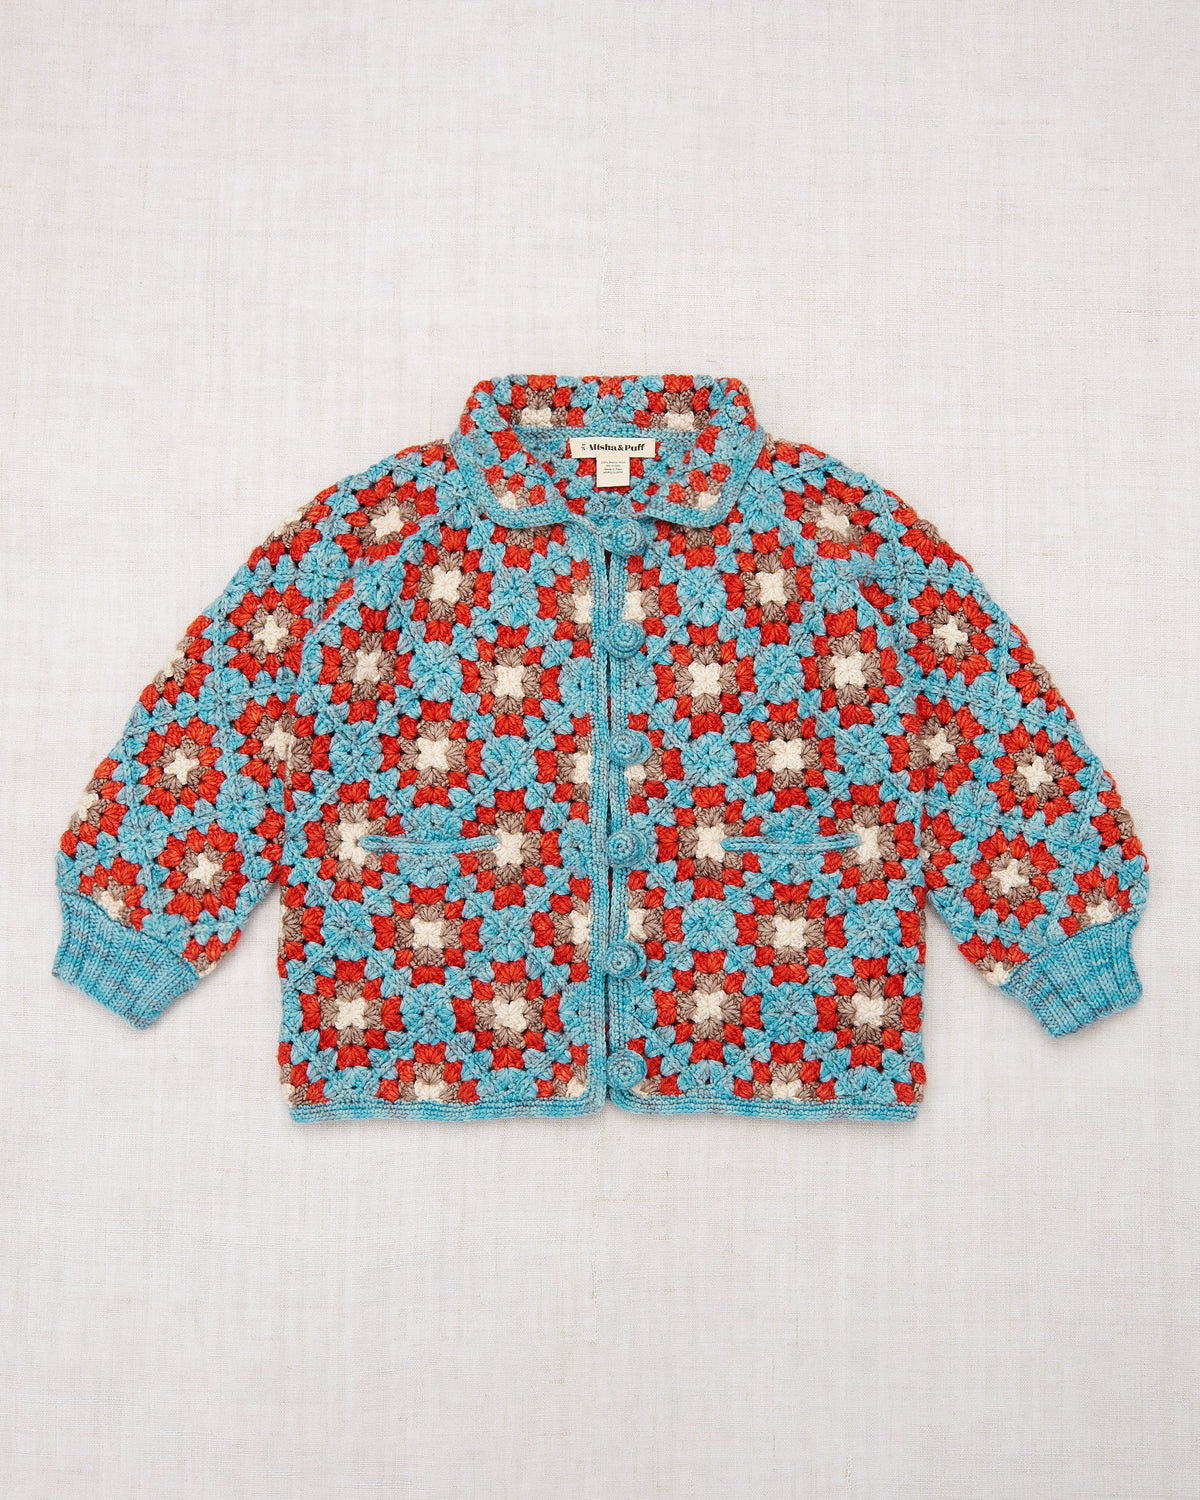 Crochet Square Jacket